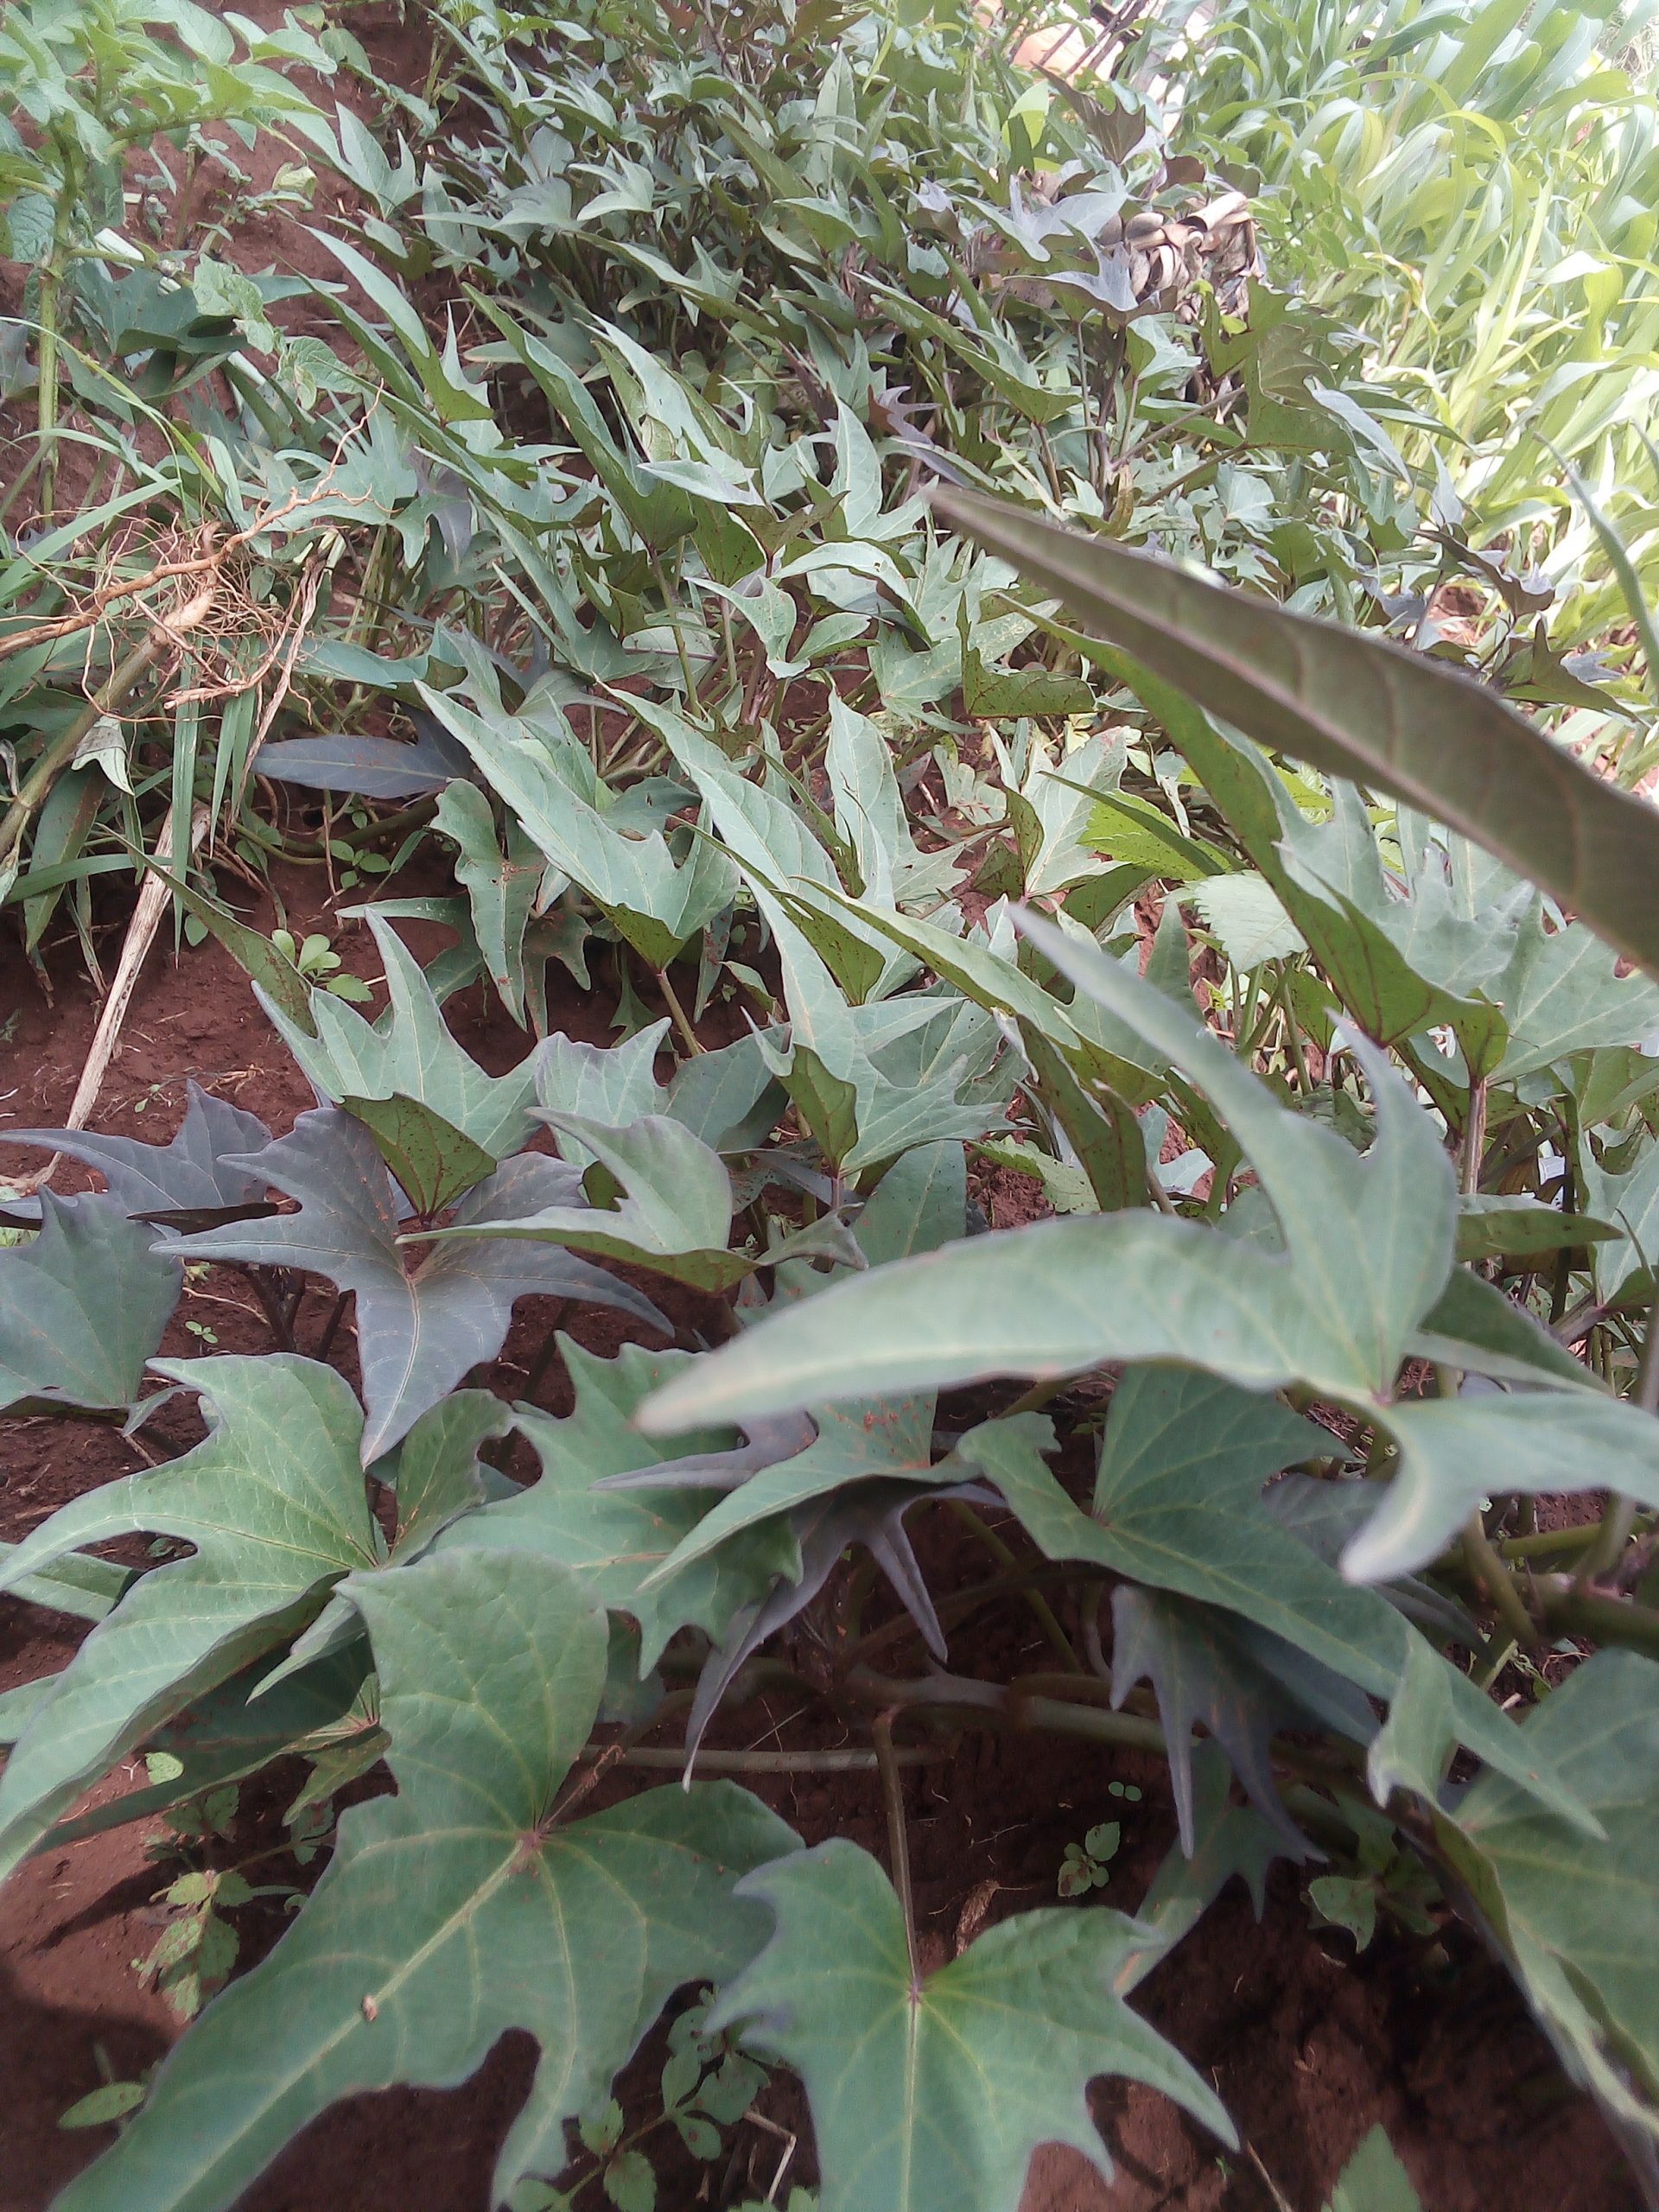 Sweet potatoes farming in Kenya